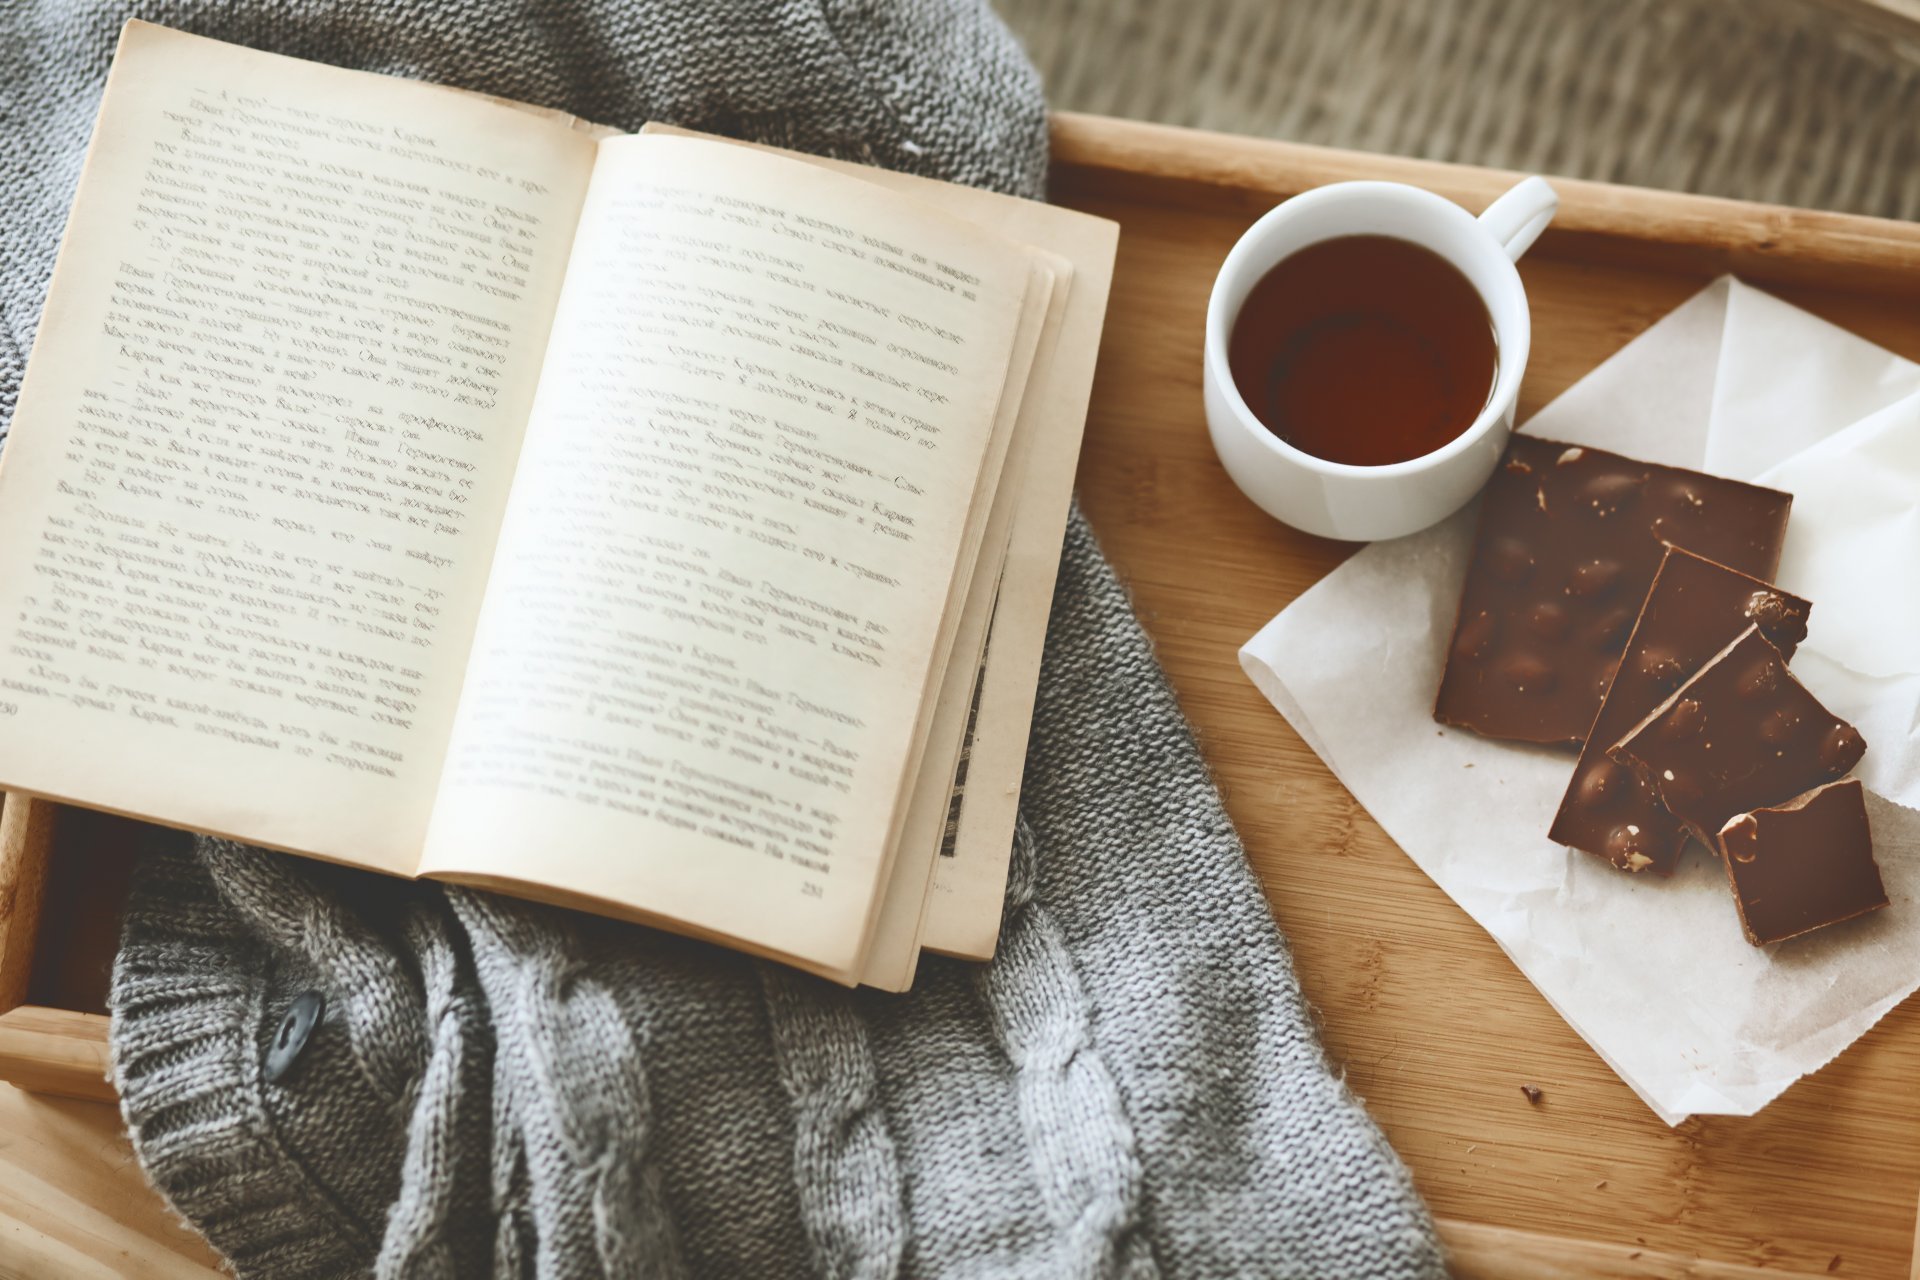 comfort-tray-book-chocolate-cup-tea-sweater.jpg